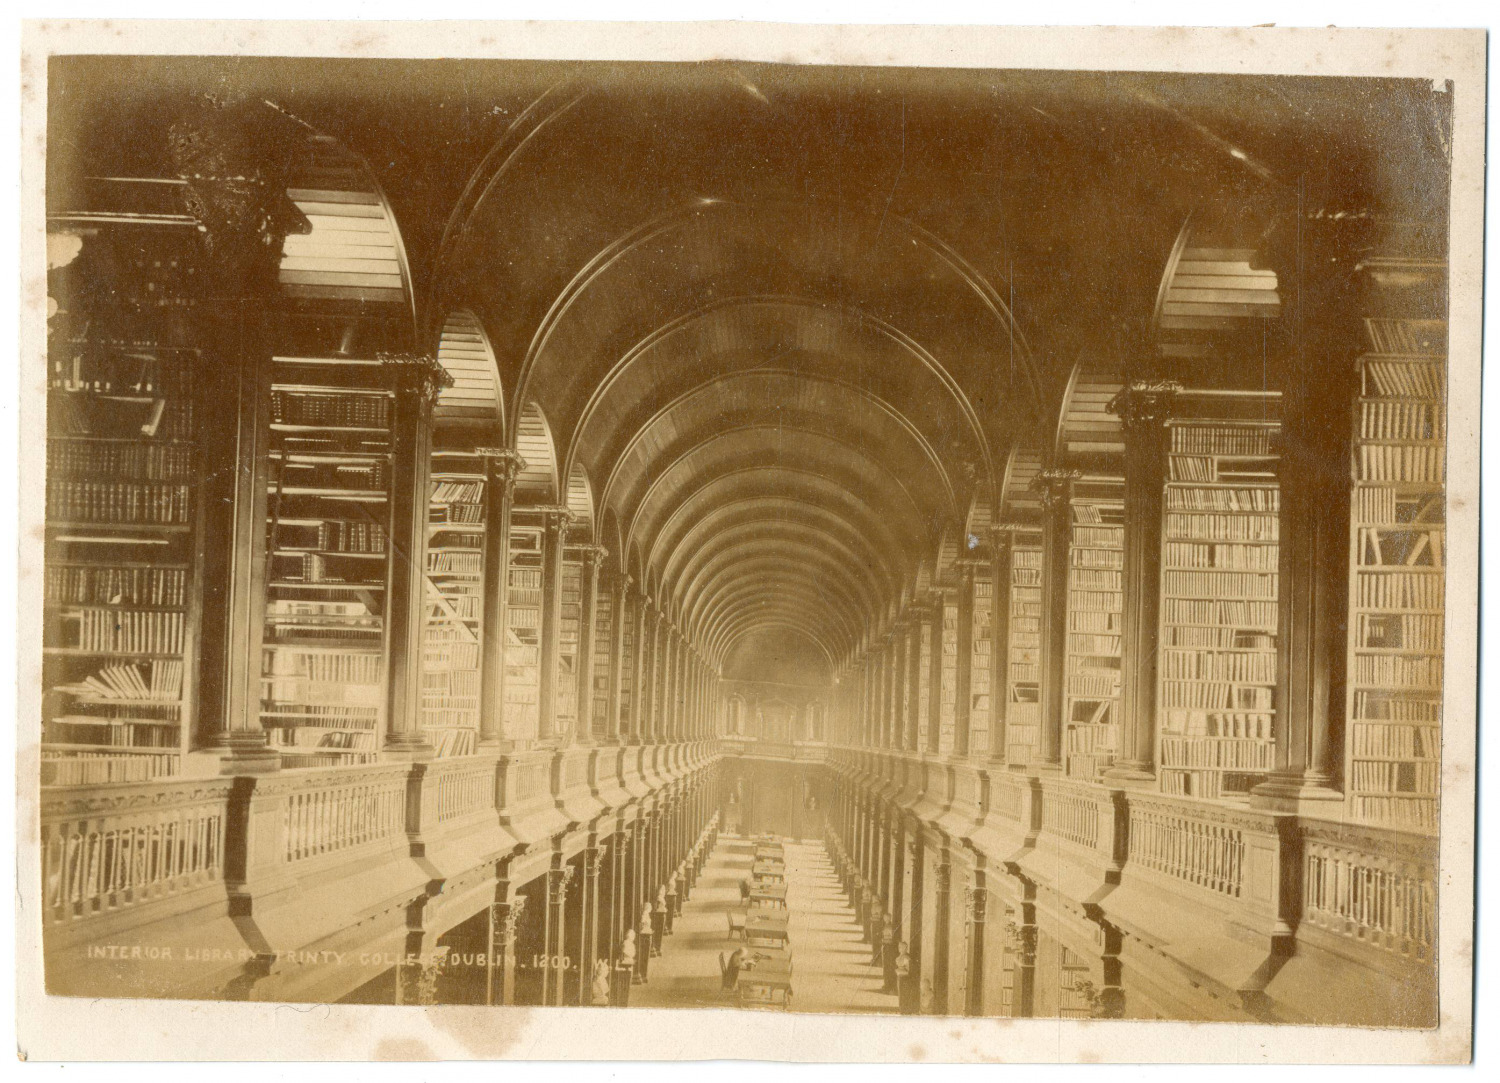 Ireland, Dublin, Trinity College, Interior Library Vintage Albumen Print, Shooting